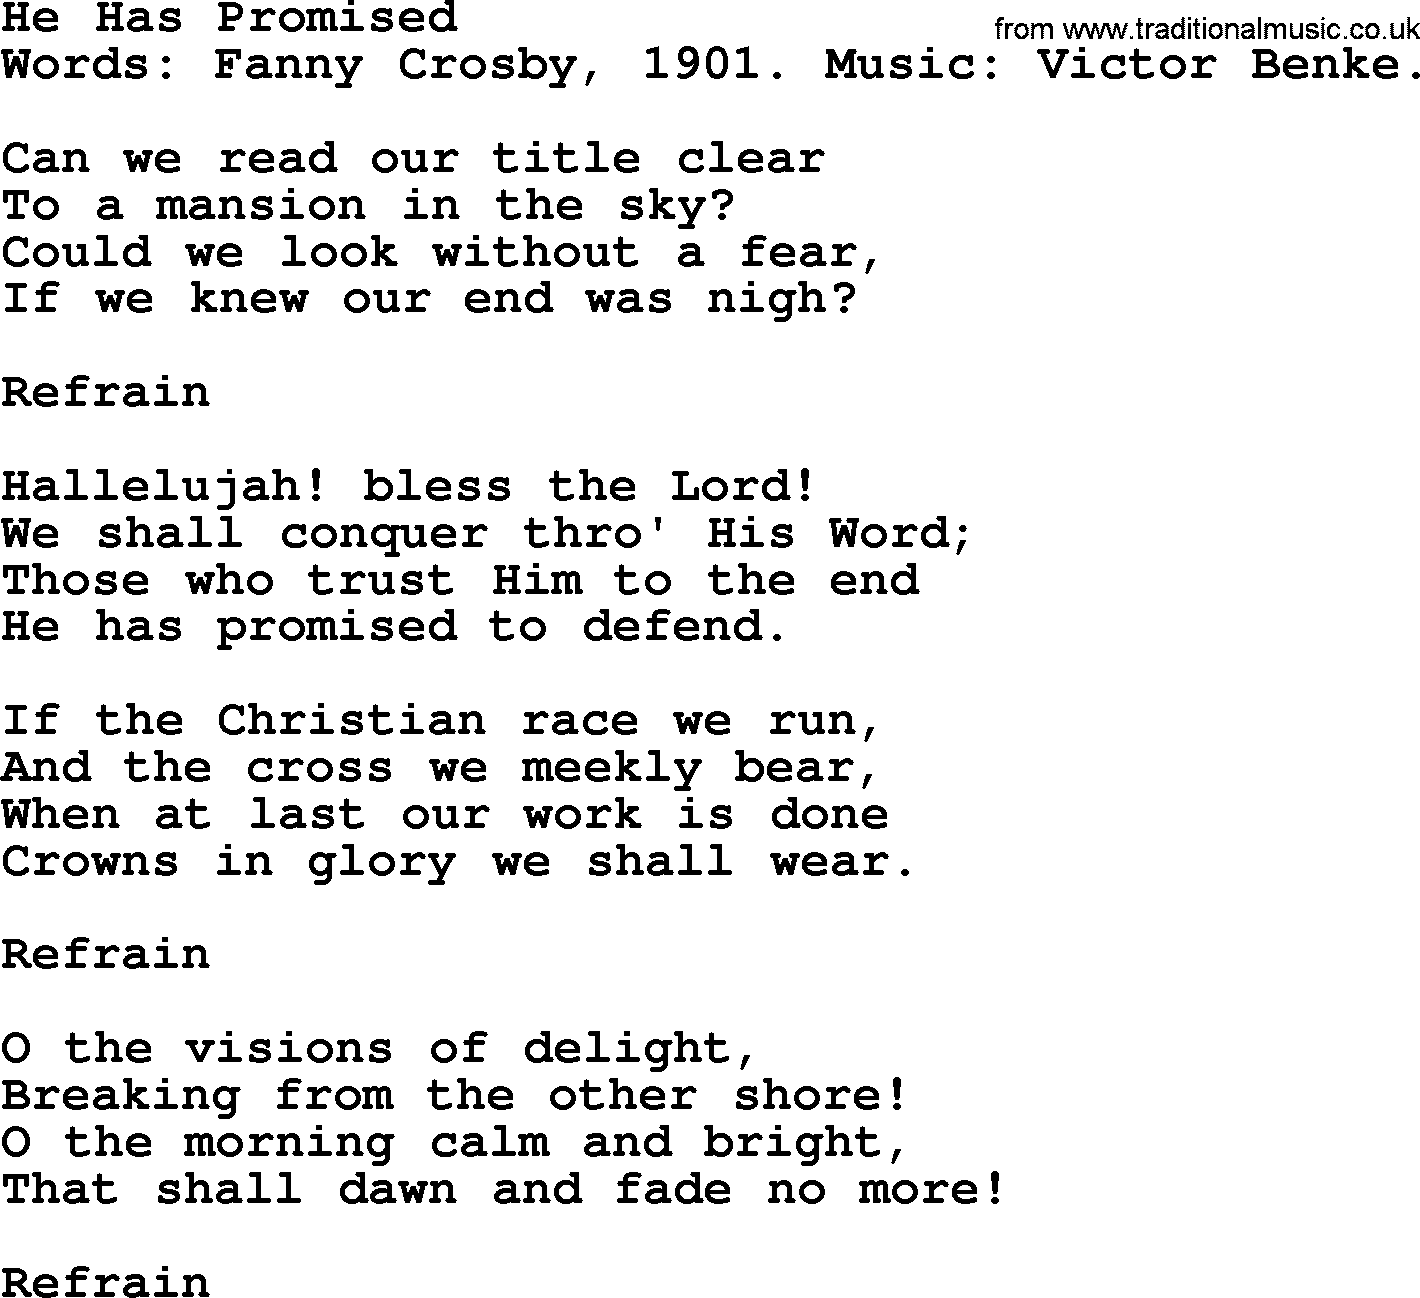 Fanny Crosby song: He Has Promised, lyrics